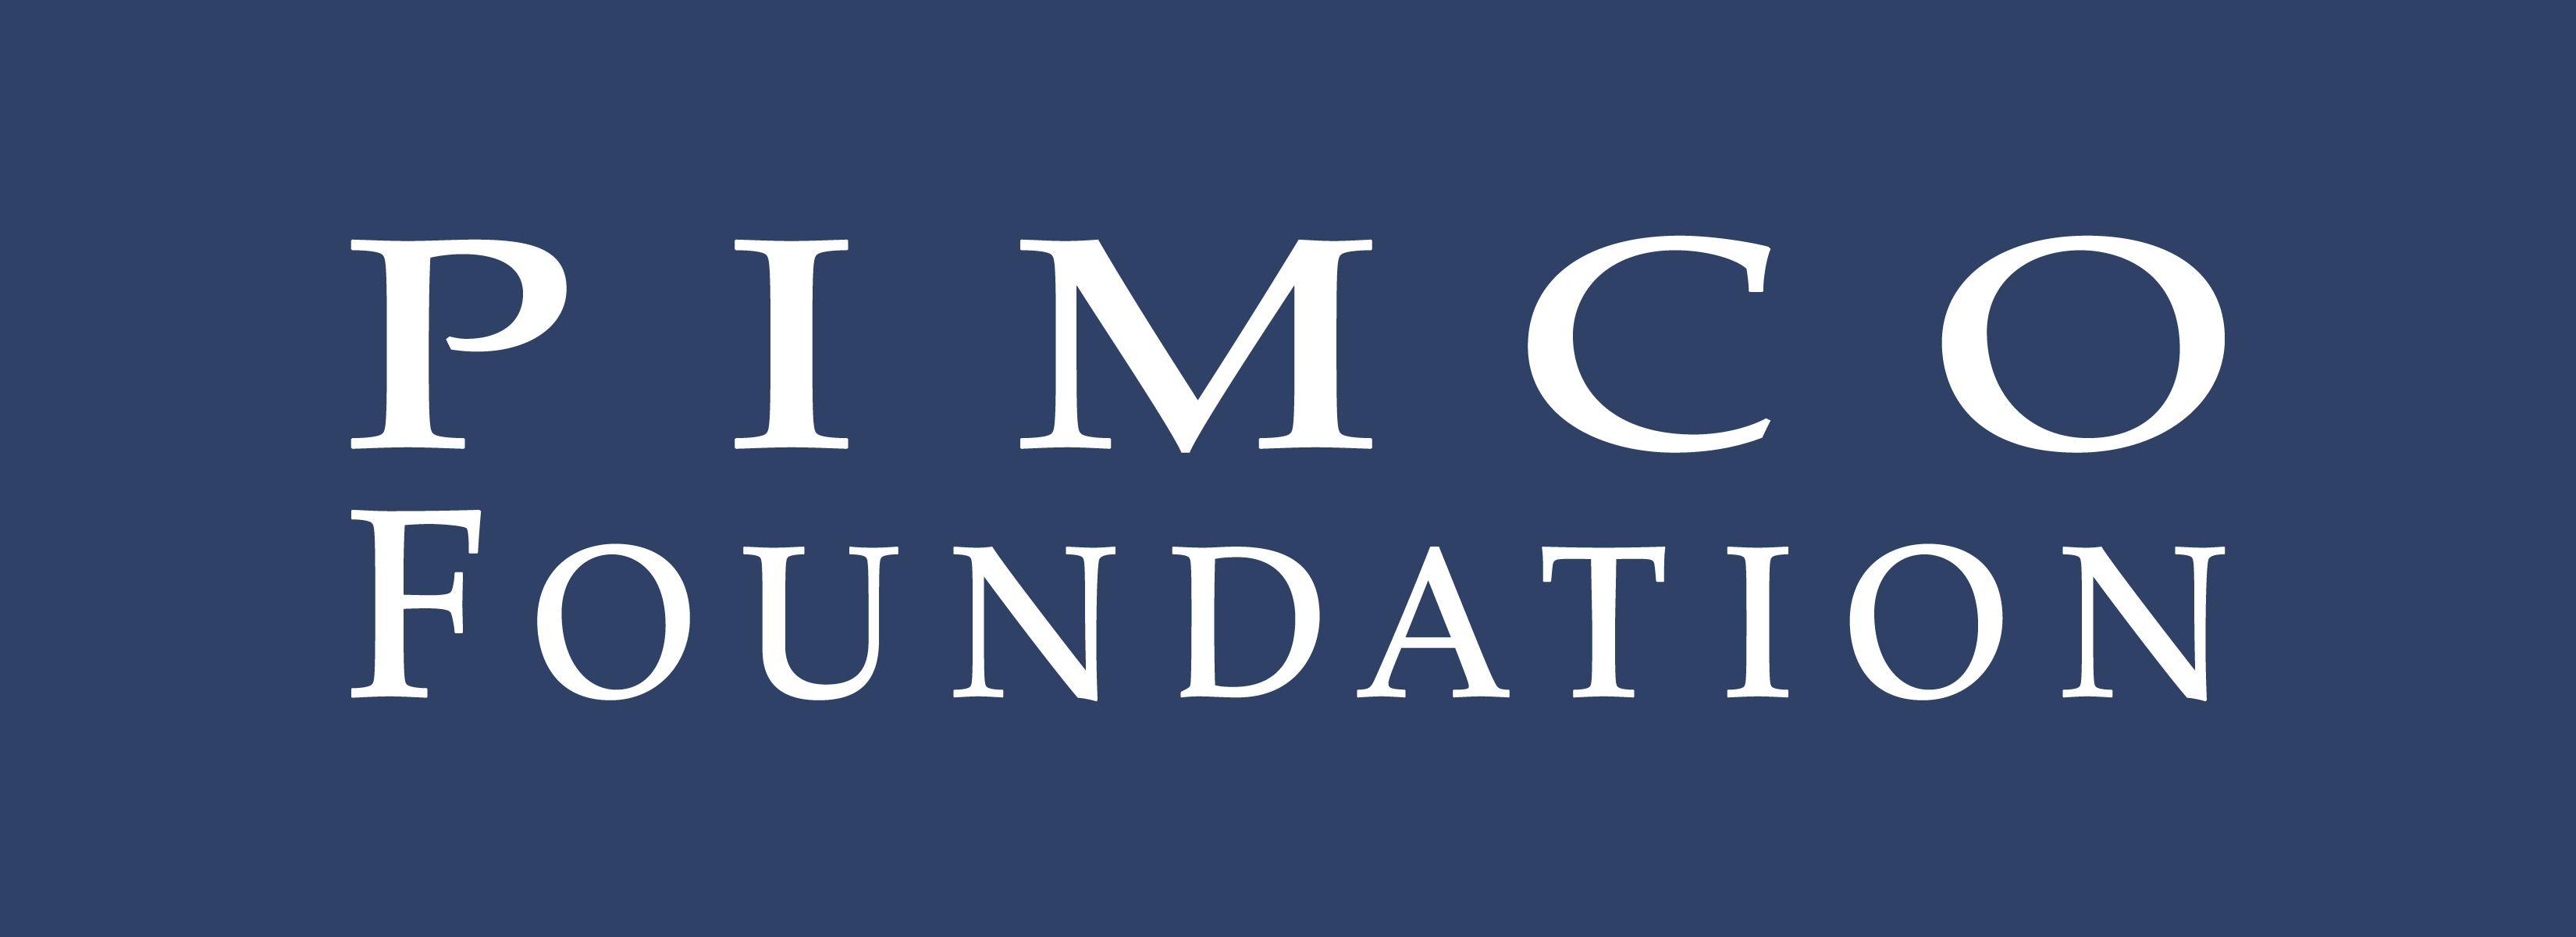 PIMCO Logo - PIMCO Foundation New Logo Blue - Illumination Foundation